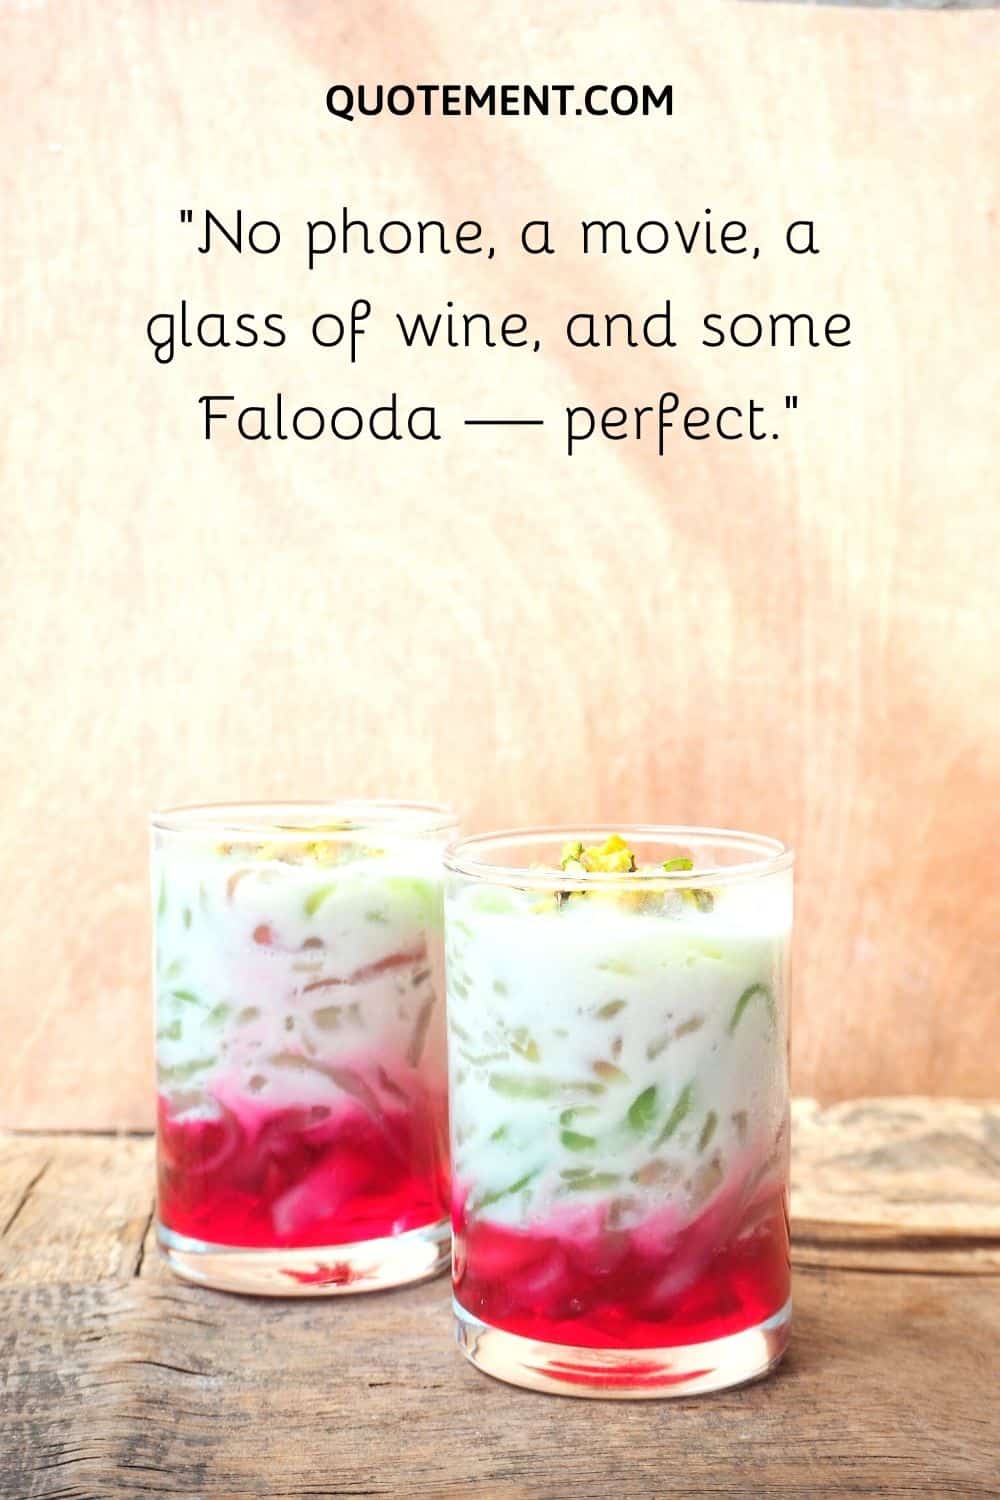 a glass of wine, and some Falooda